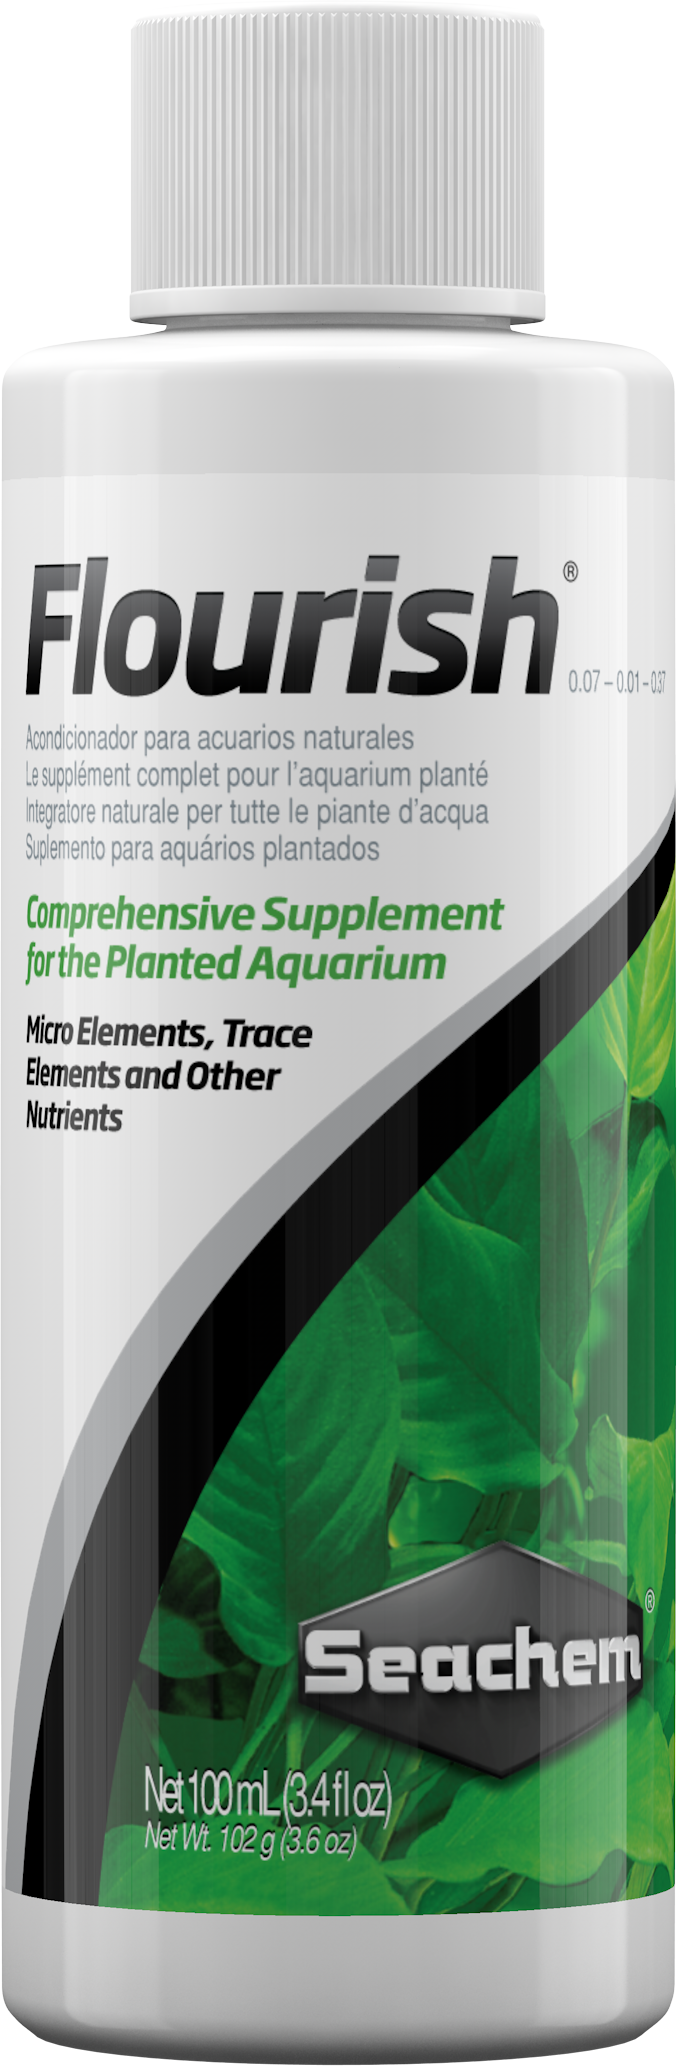 Seachem Flourish 100ml For Sale | Live Freshwater Plant Fertilizer and Supplement | Seachem laboratories